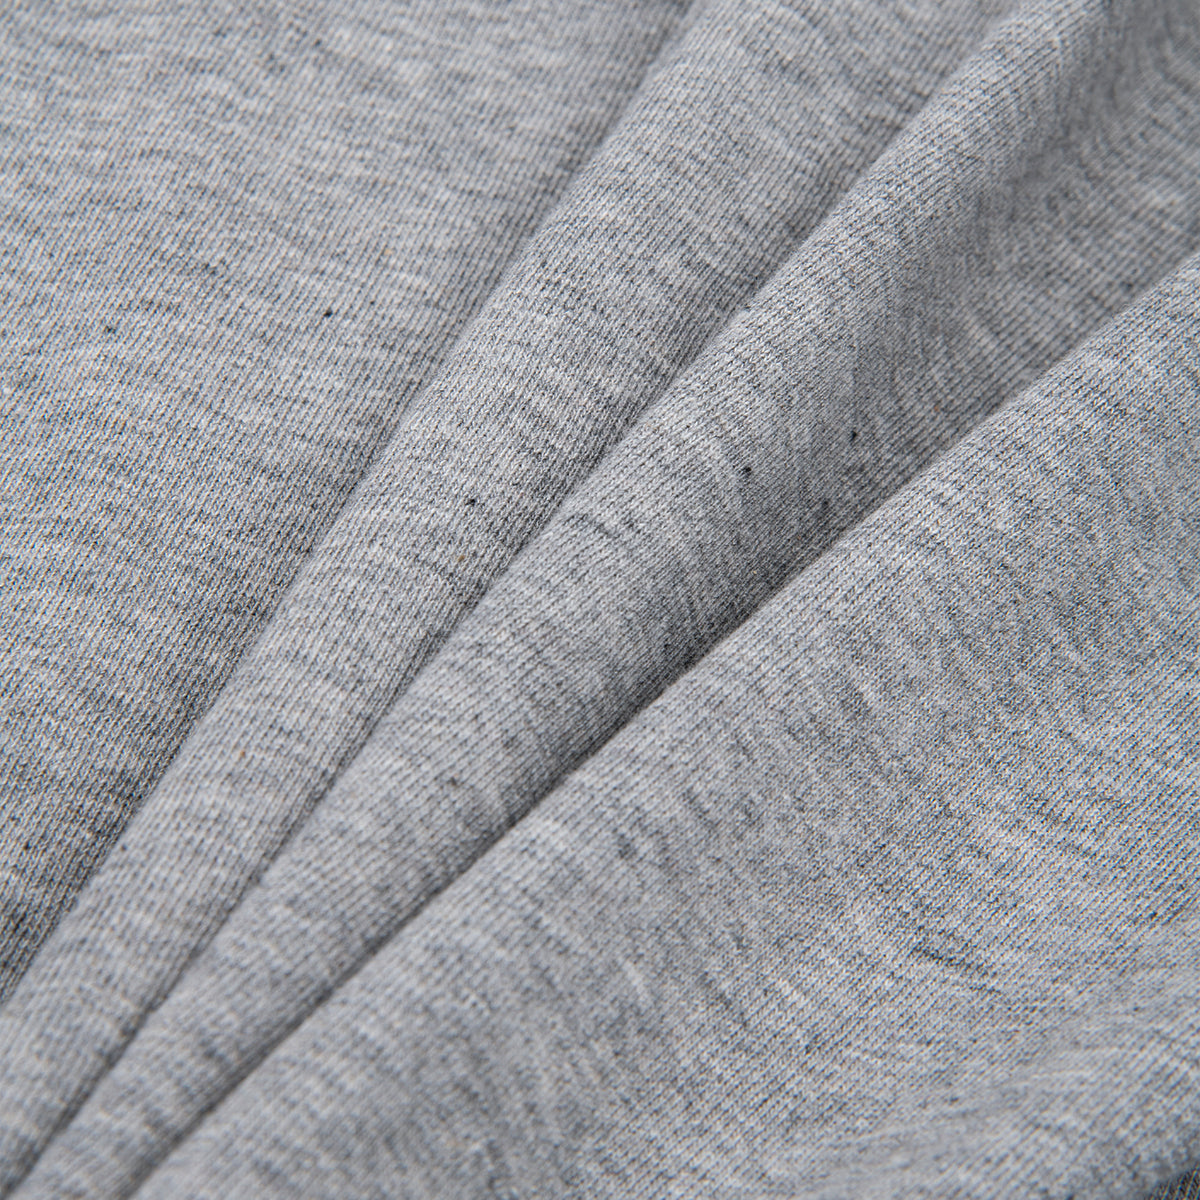 1950s Short Sleeve Crew Neck T-Shirt - Grey Melange